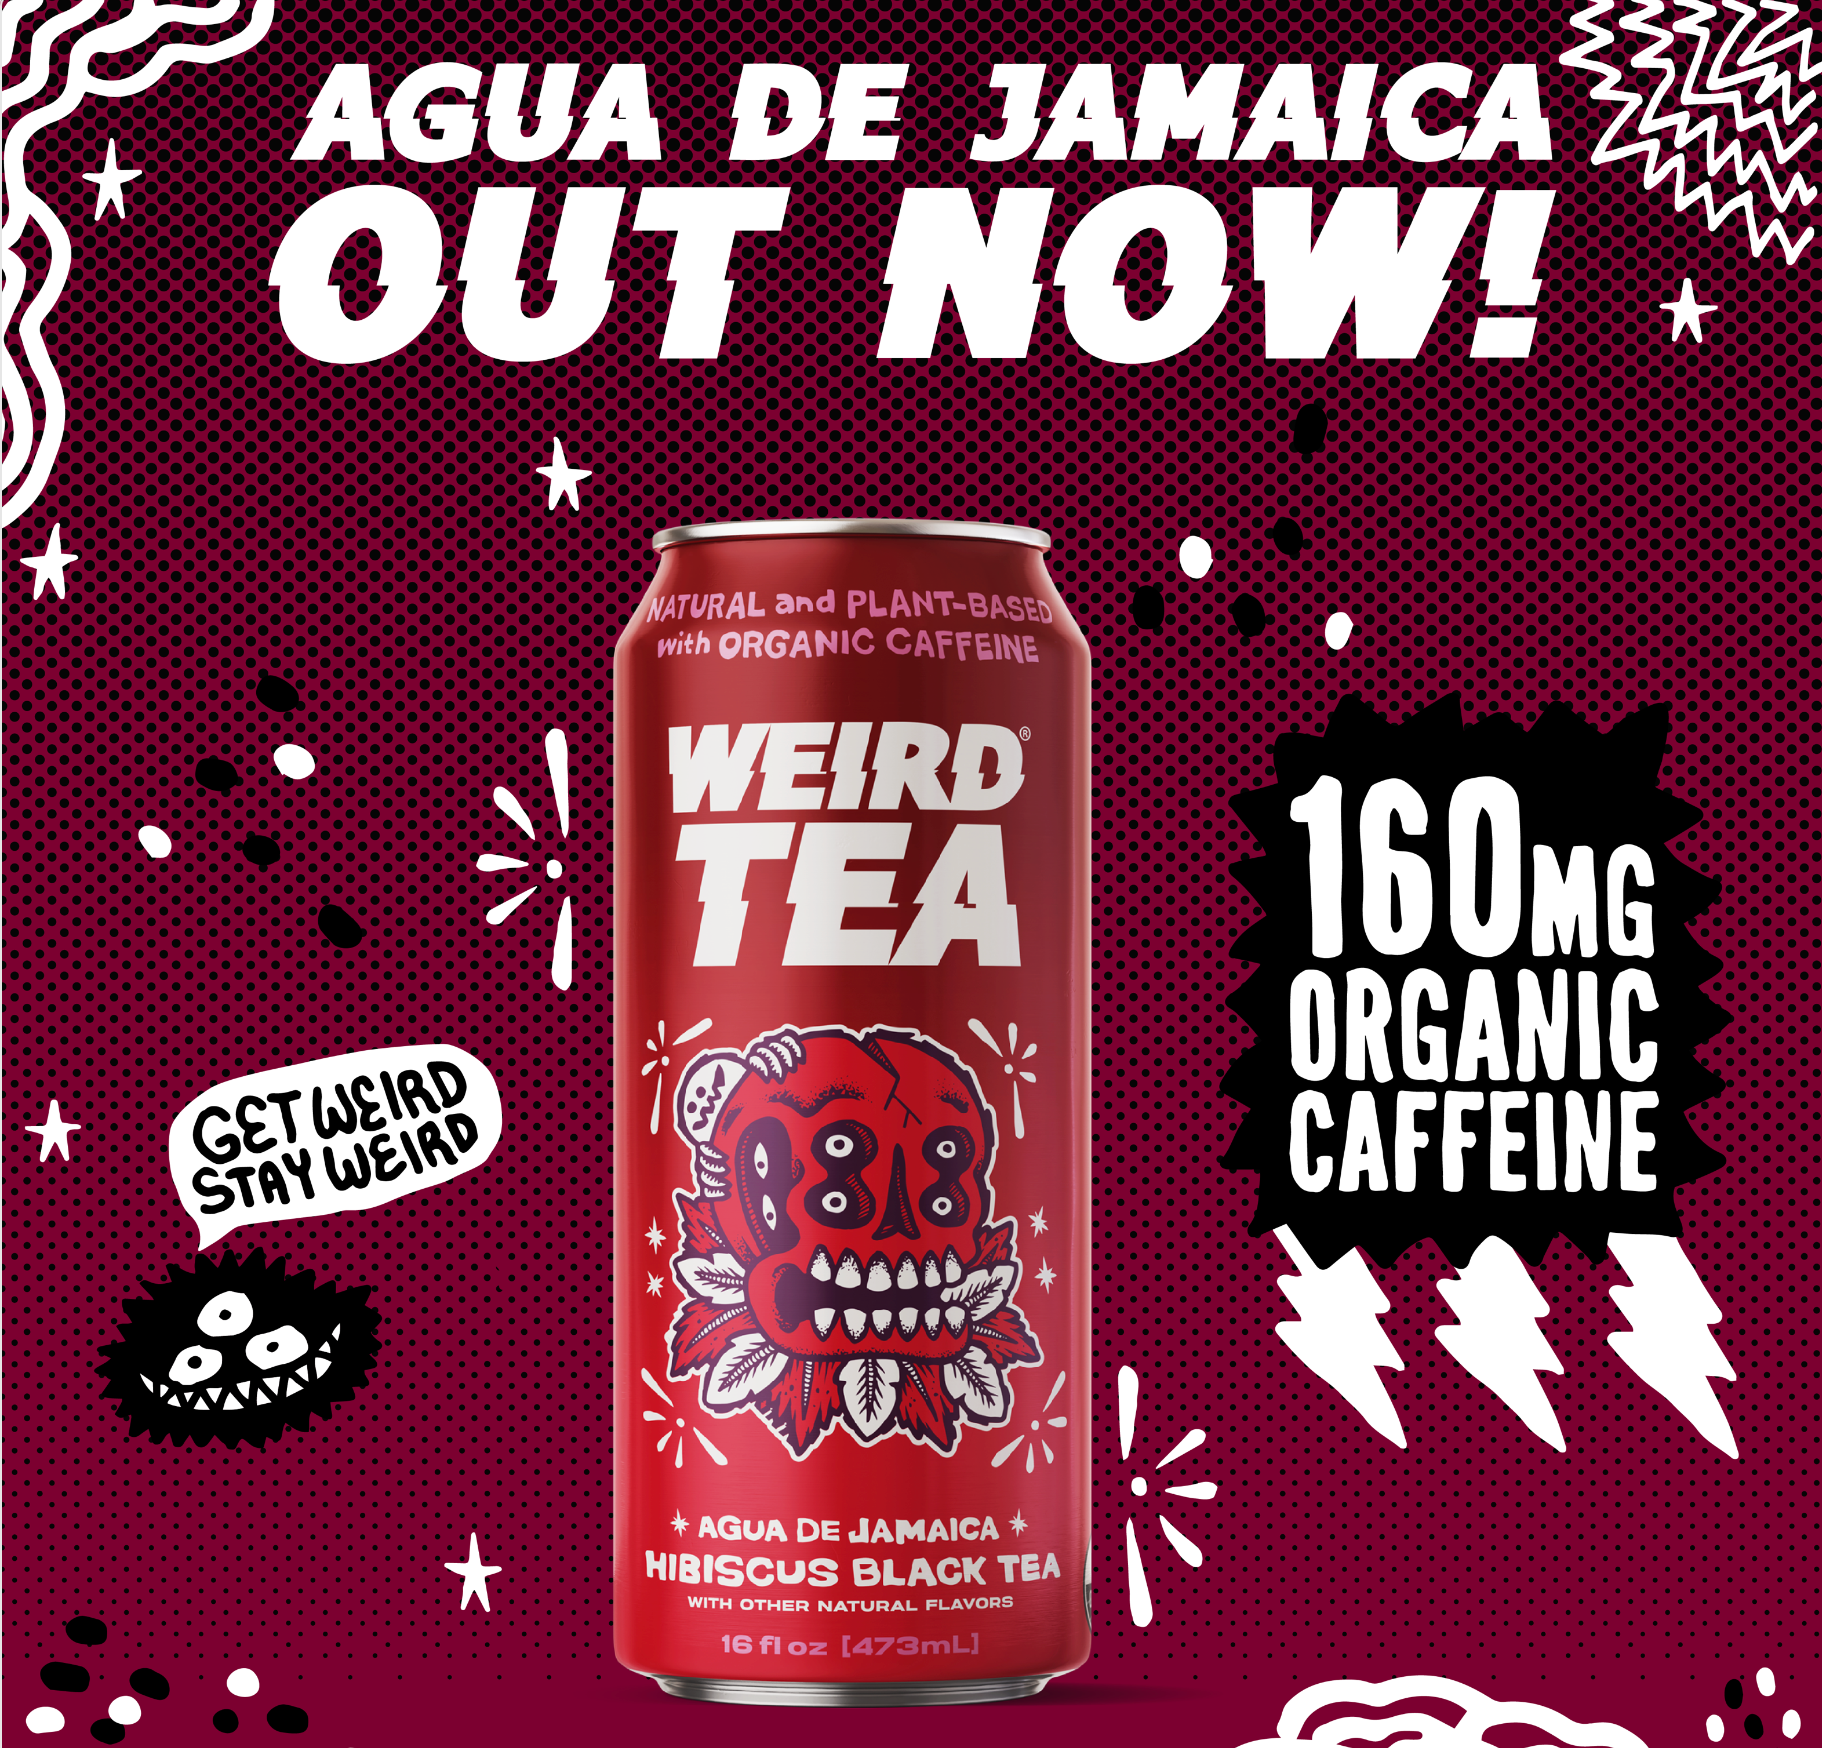 Agua de Jamaica Hibiscus Black Tea Now Available!